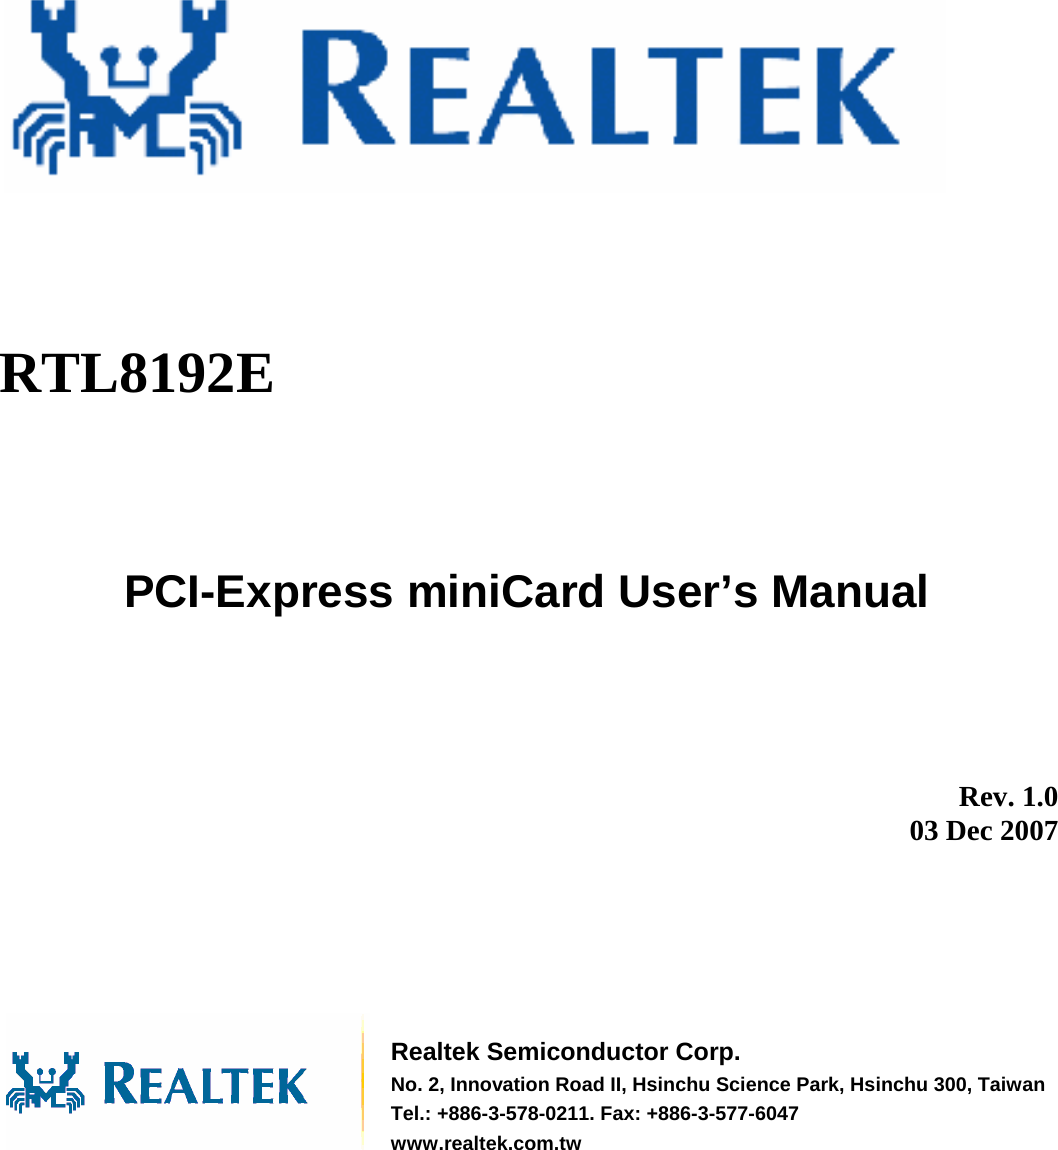                PCI-Express miniCard User’s Manual          Rev. 1.0 03 Dec 2007        Realtek Semiconductor Corp. No. 2, Innovation Road II, Hsinchu Science Park, Hsinchu 300, TaiwanTel.: +886-3-578-0211. Fax: +886-3-577-6047 www.realtek.com.tw RTL8192E 